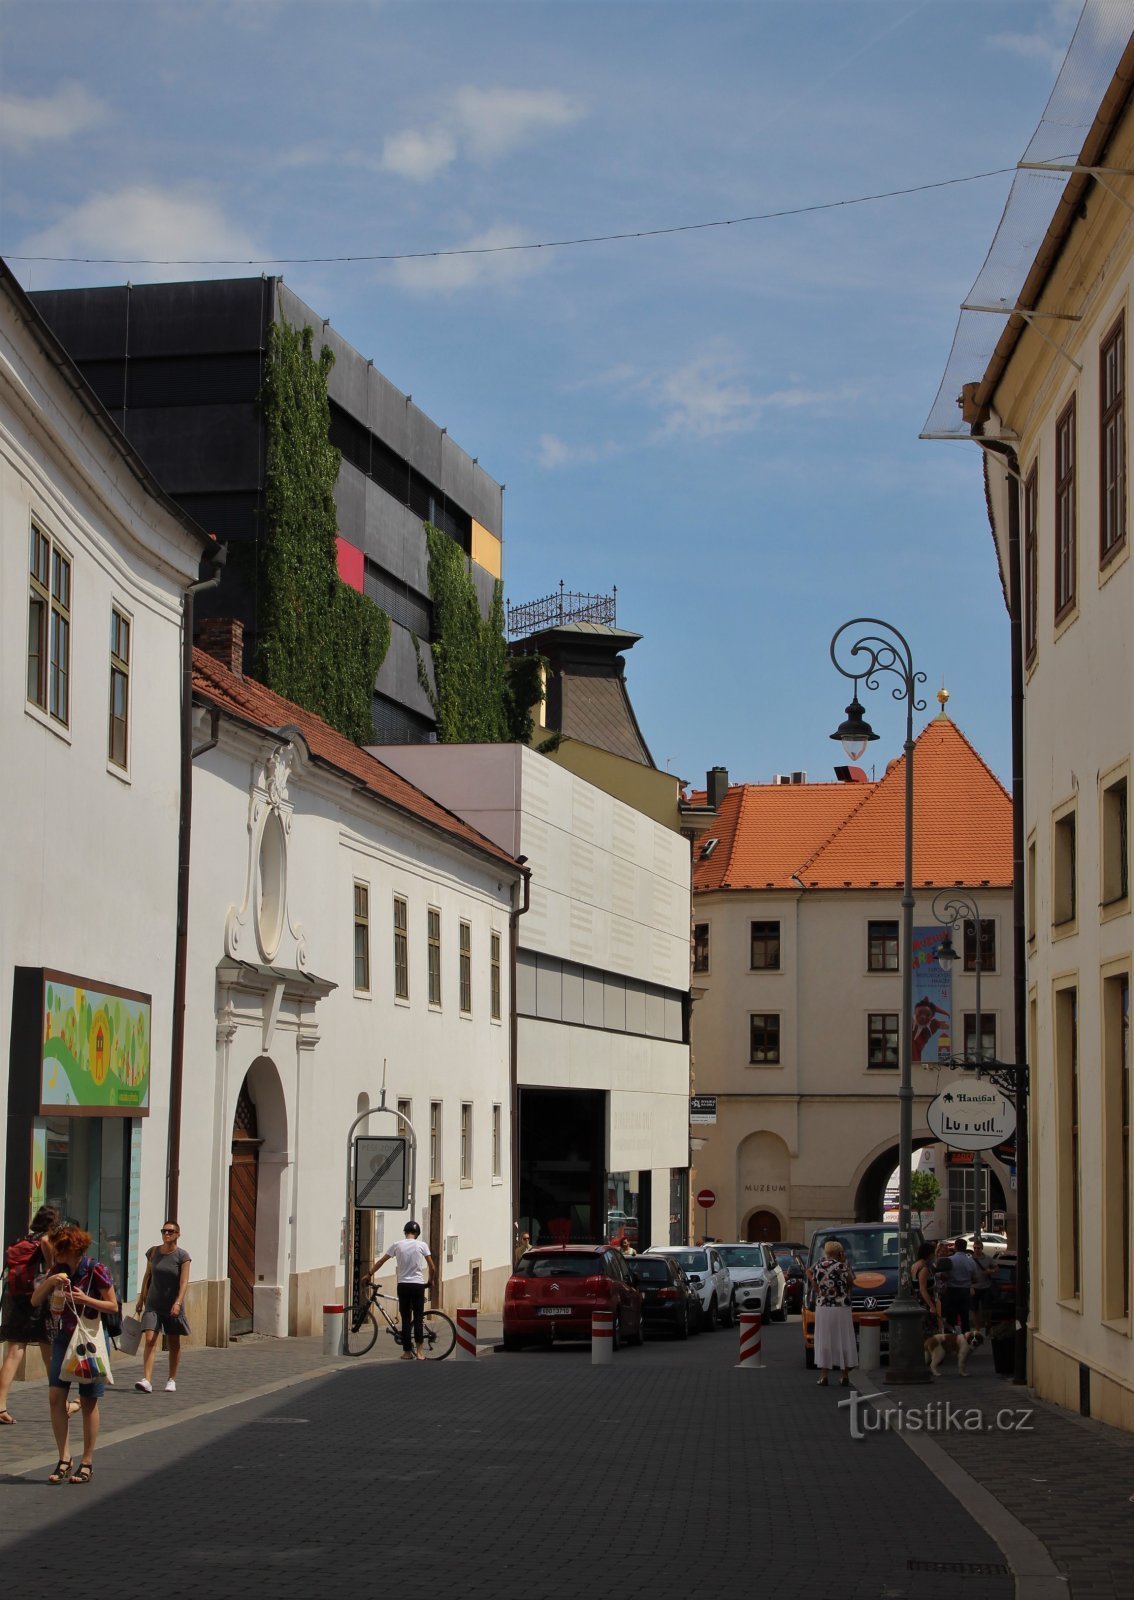 Strada Orlí în fundal cu poarta Menínská